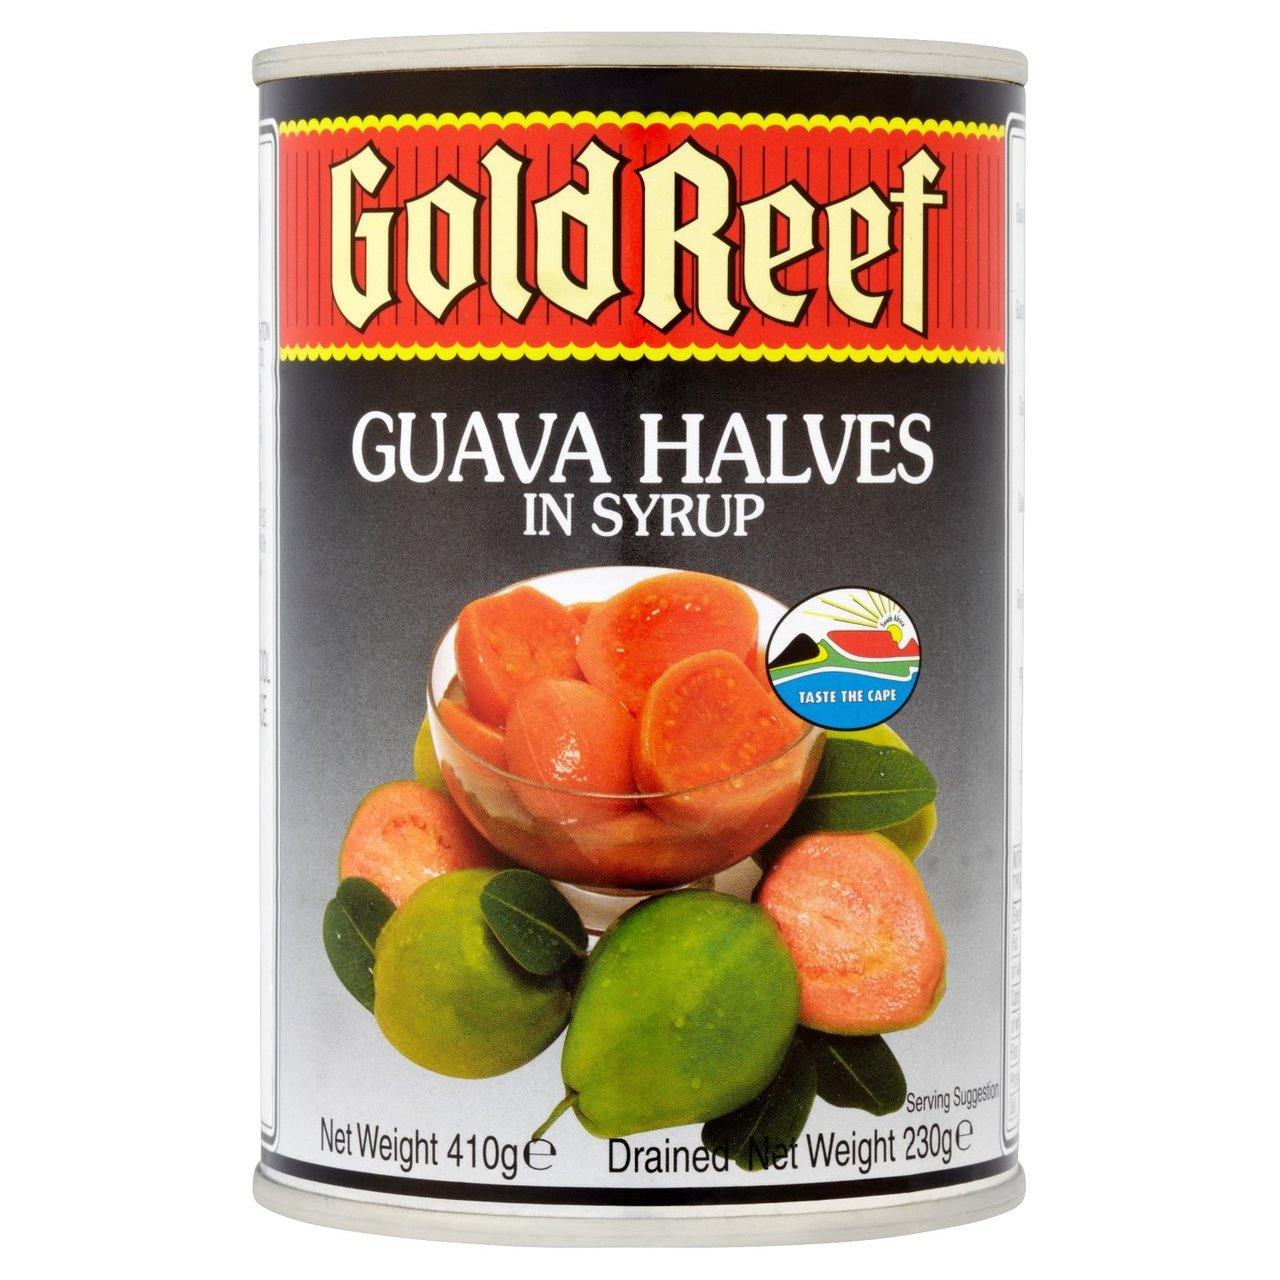 Gold reef guava halves in syrup SaveCo Online Ltd